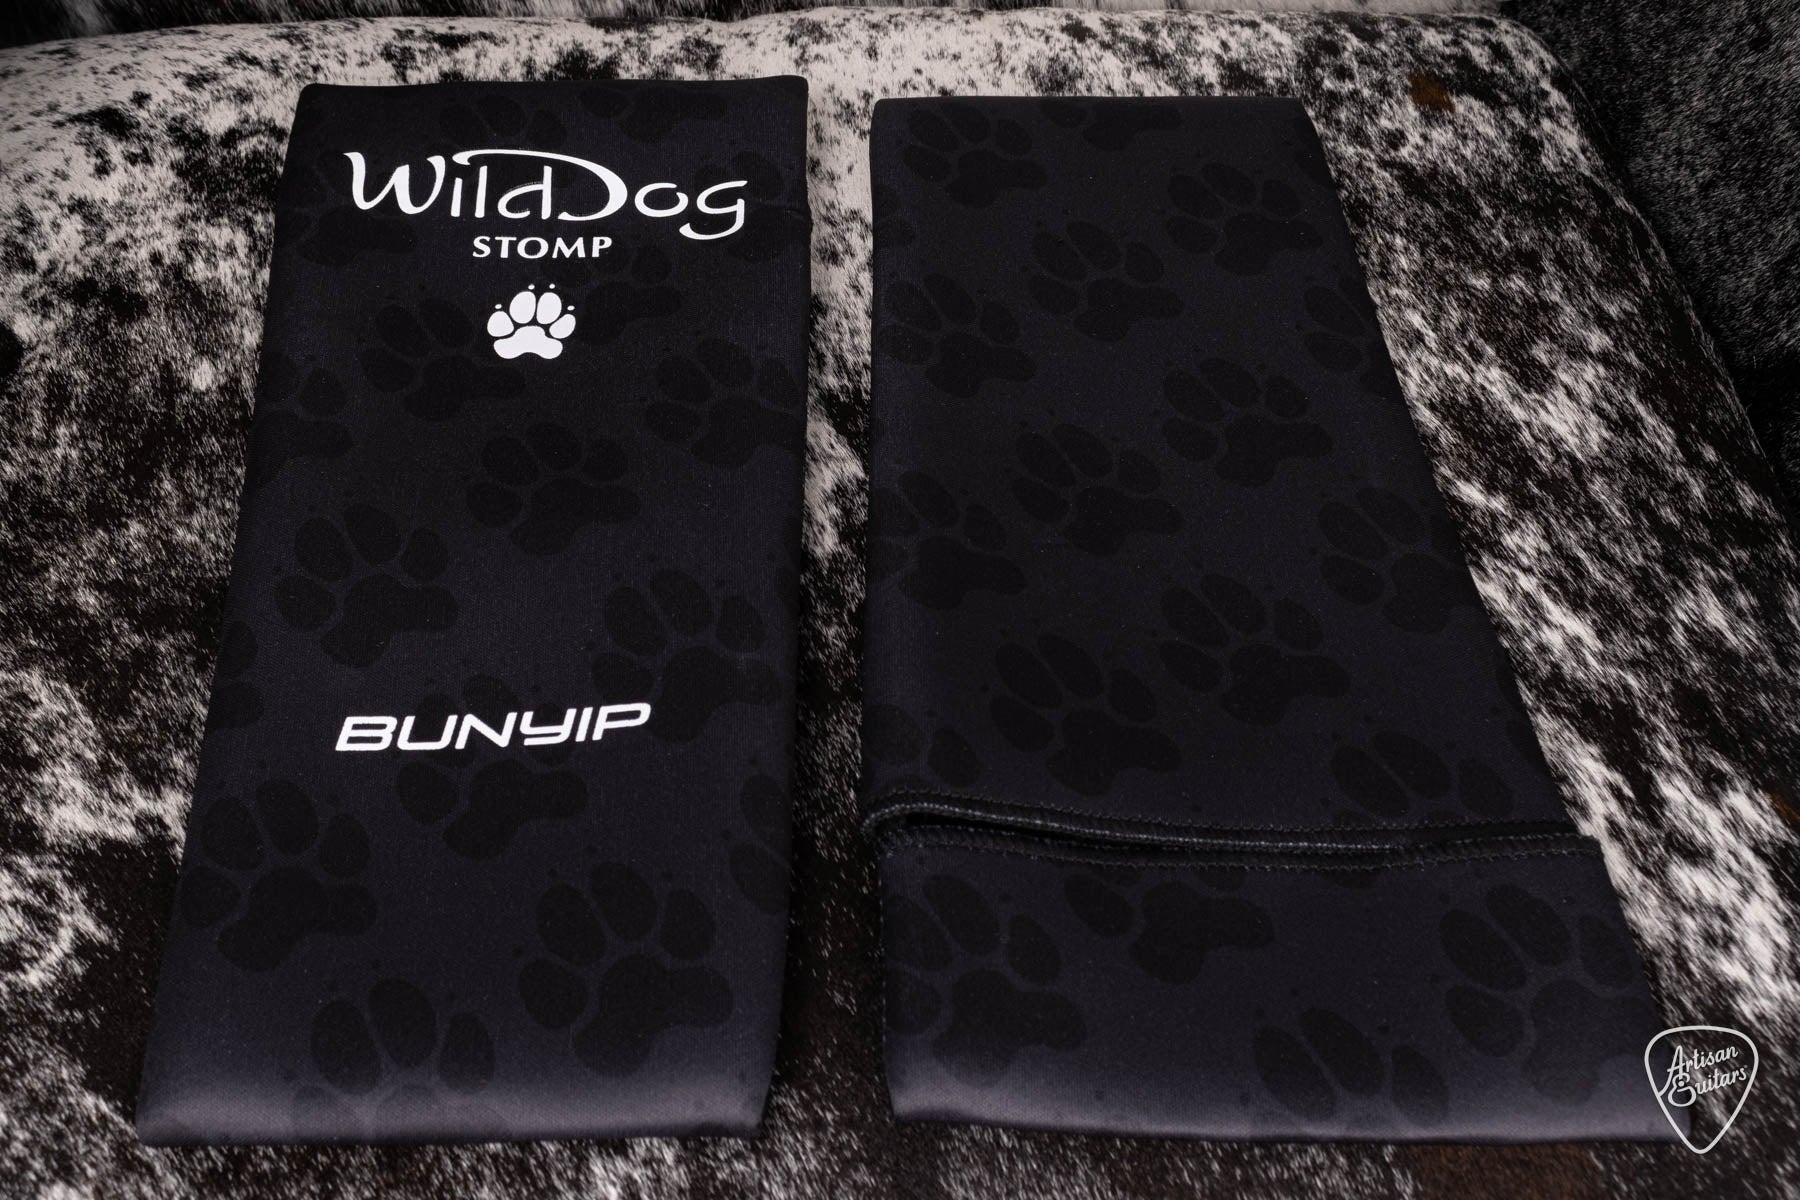 Wild Dog Bunyip Stomp Box - WD-280723